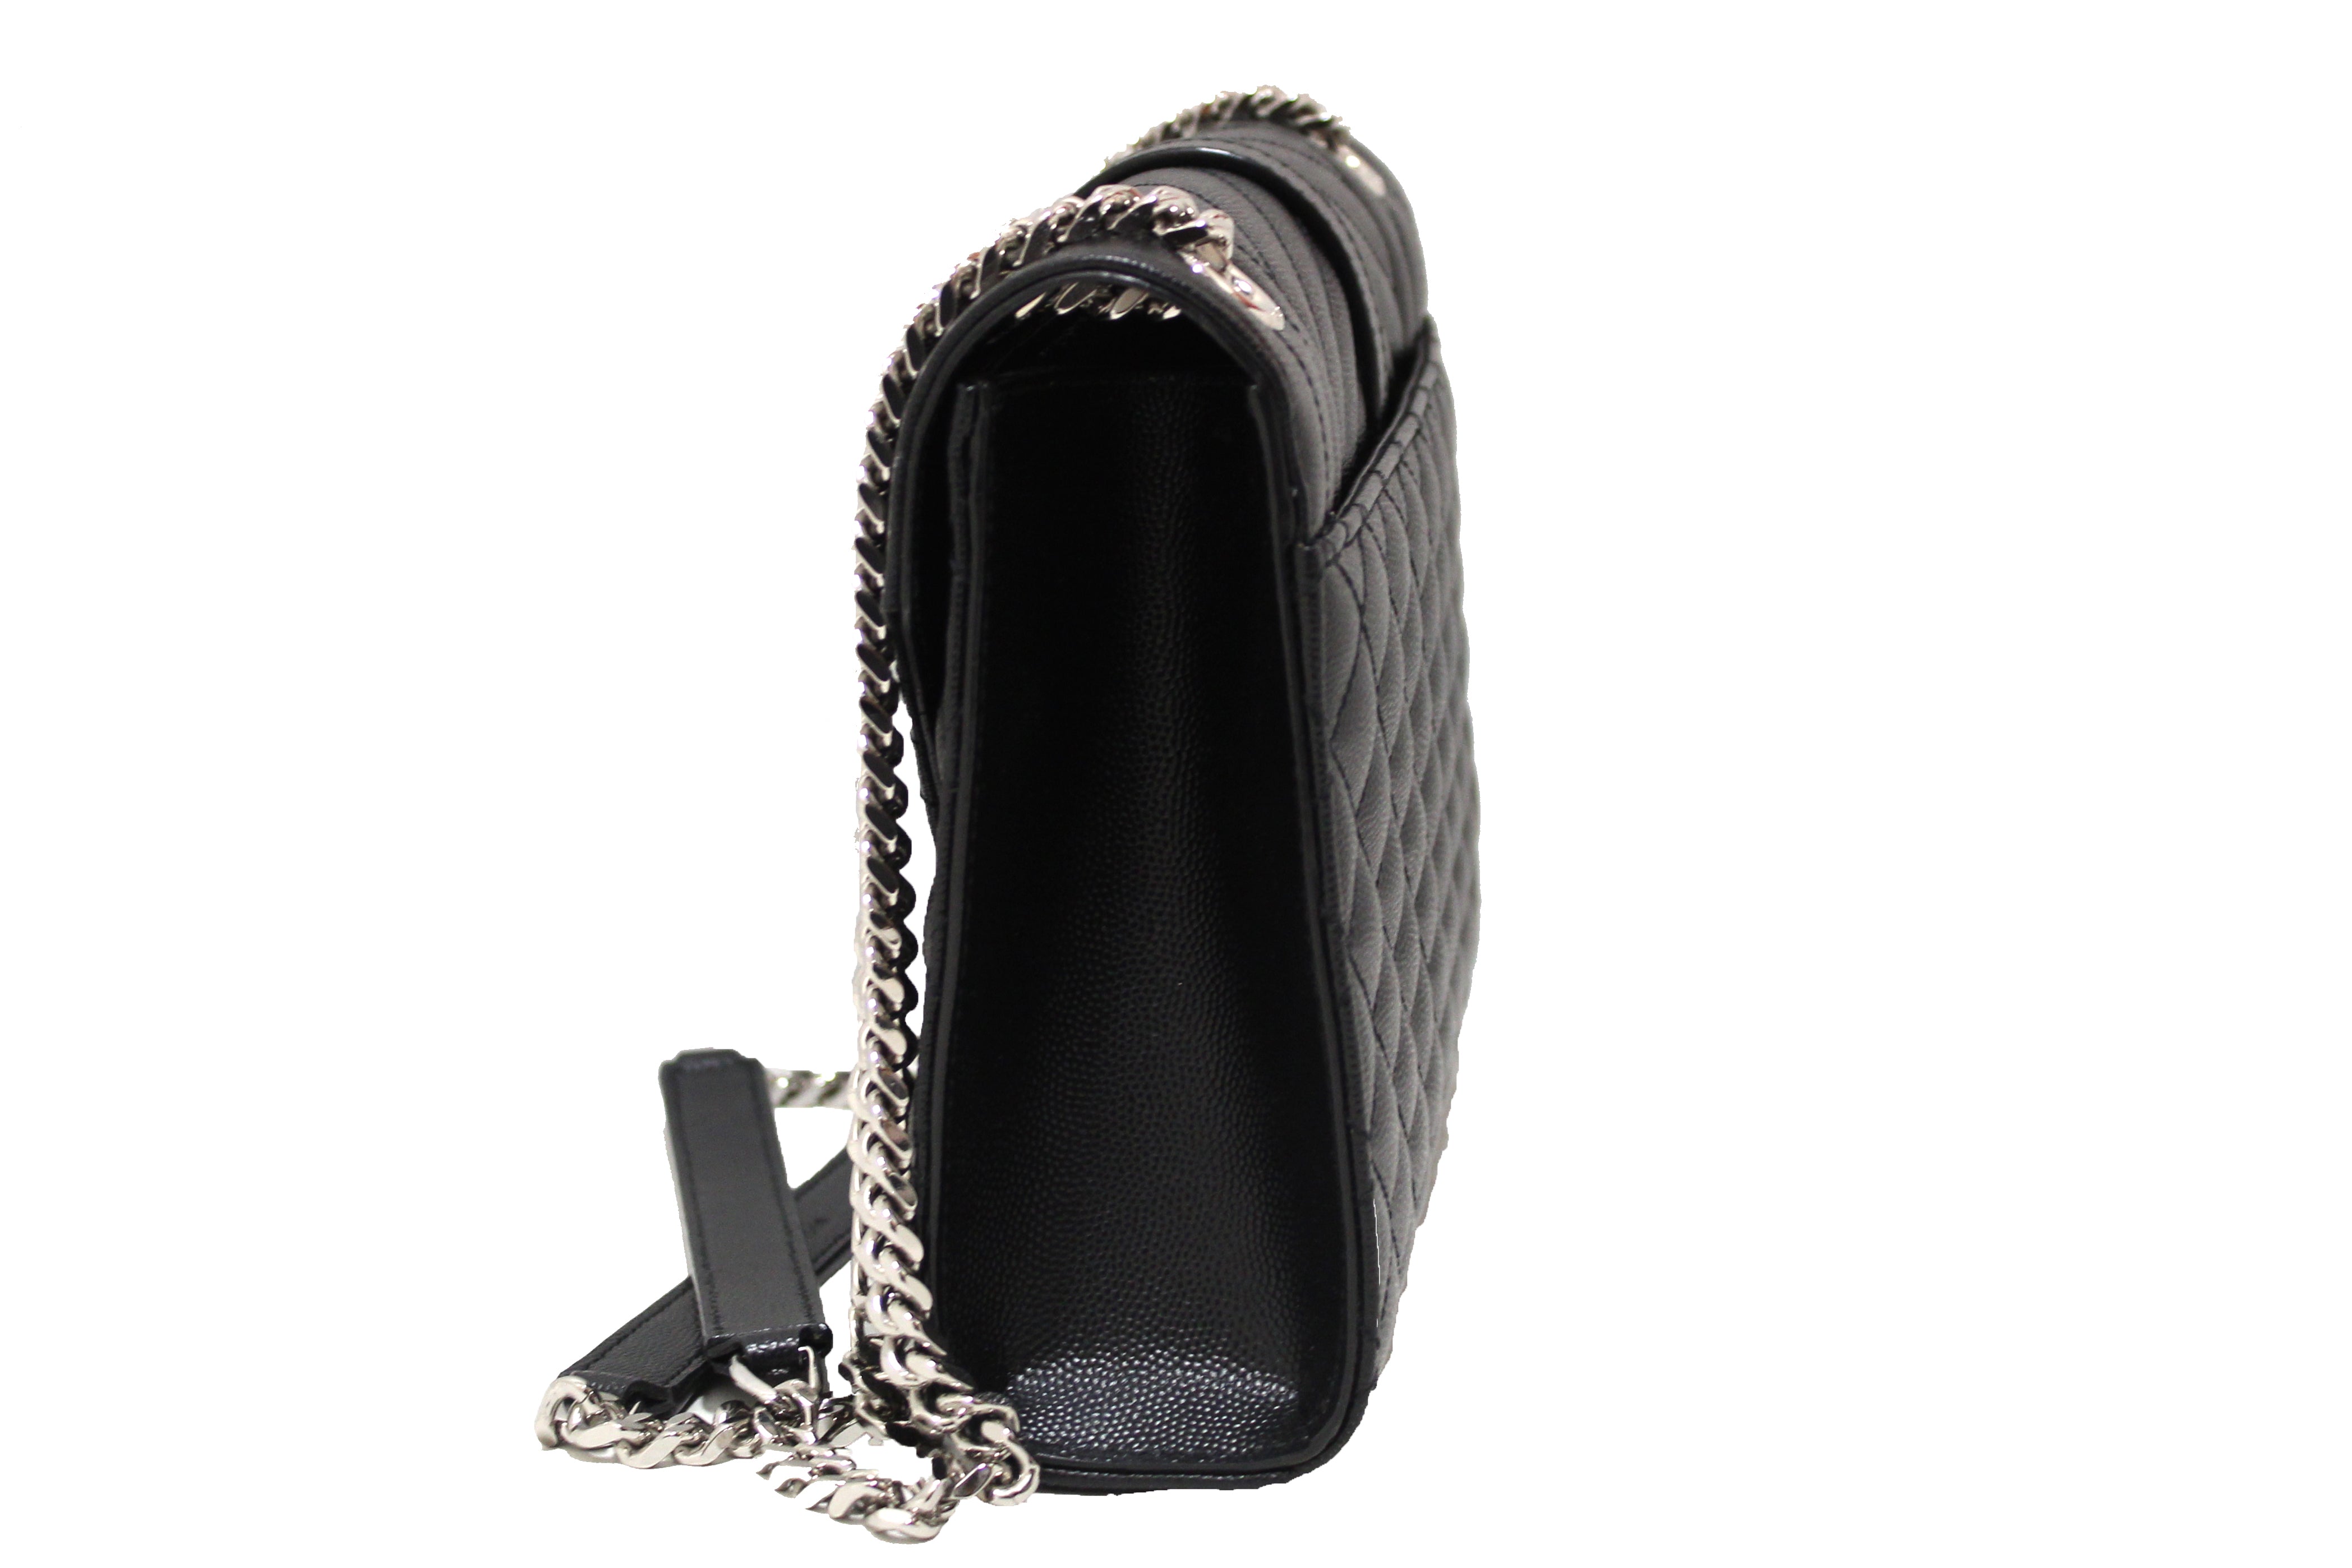 Authentic Saint Laurent Black Matelasse Grain De Poudre Embossed Leather Medium Envelope Bag